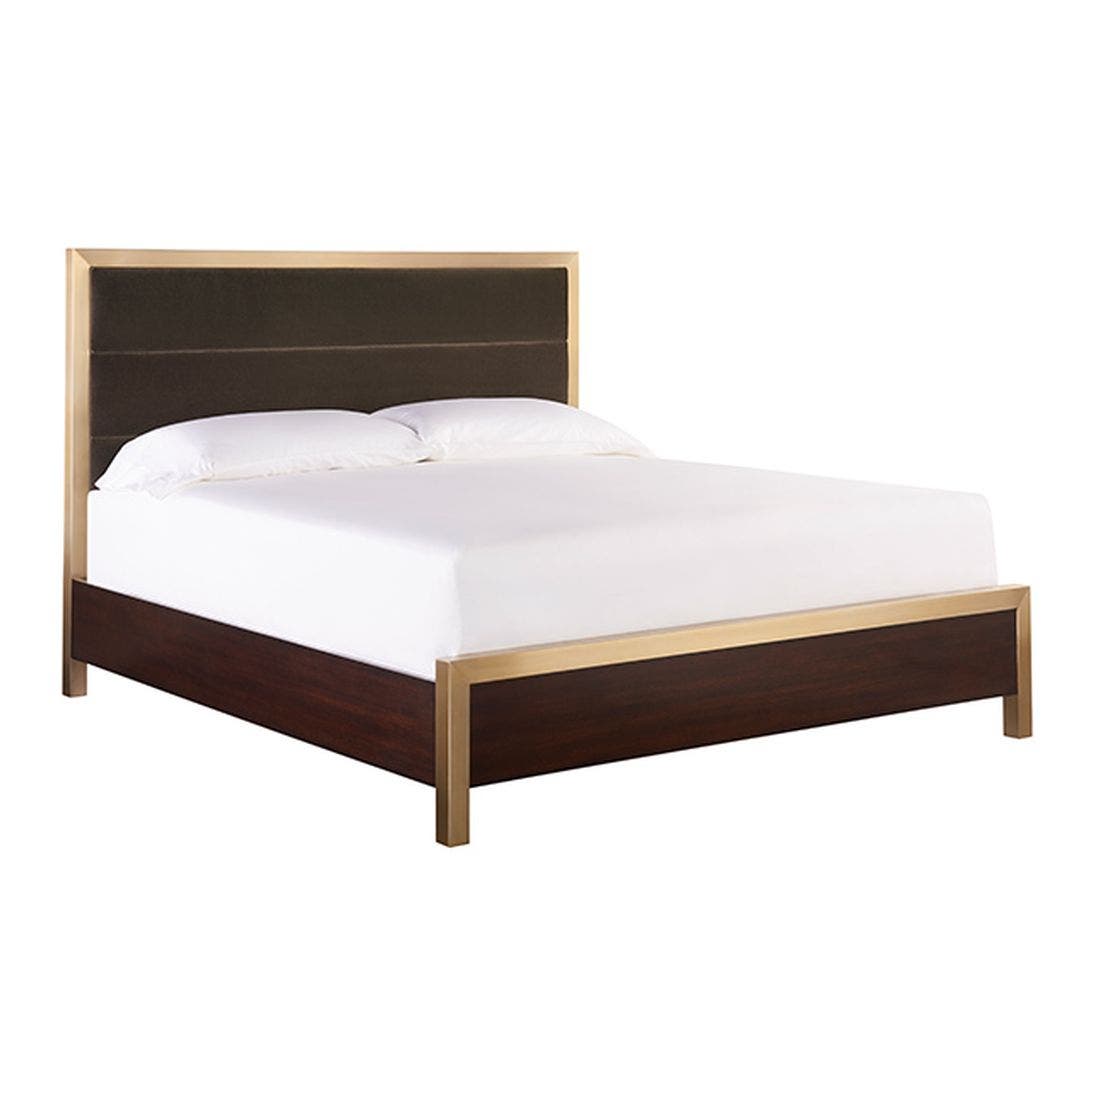 19170518-modern-mahogany-furniture-bedroom-furniture-beds-01